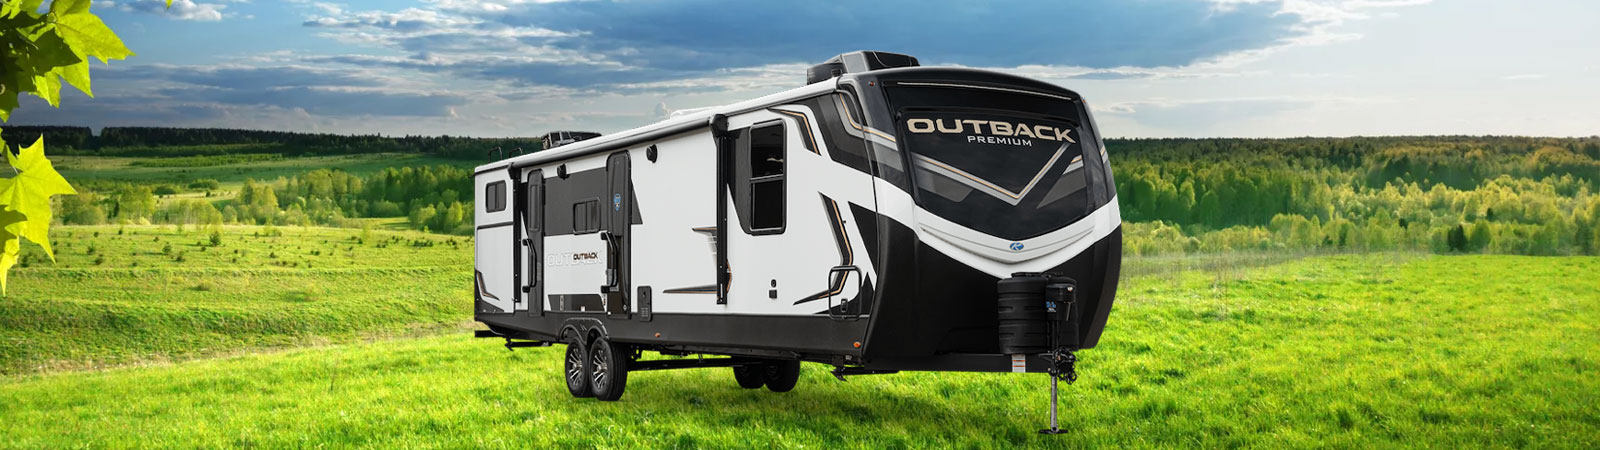 New Keystone RV Outback Travel Trailers for Sale in Beloit Kansas USA